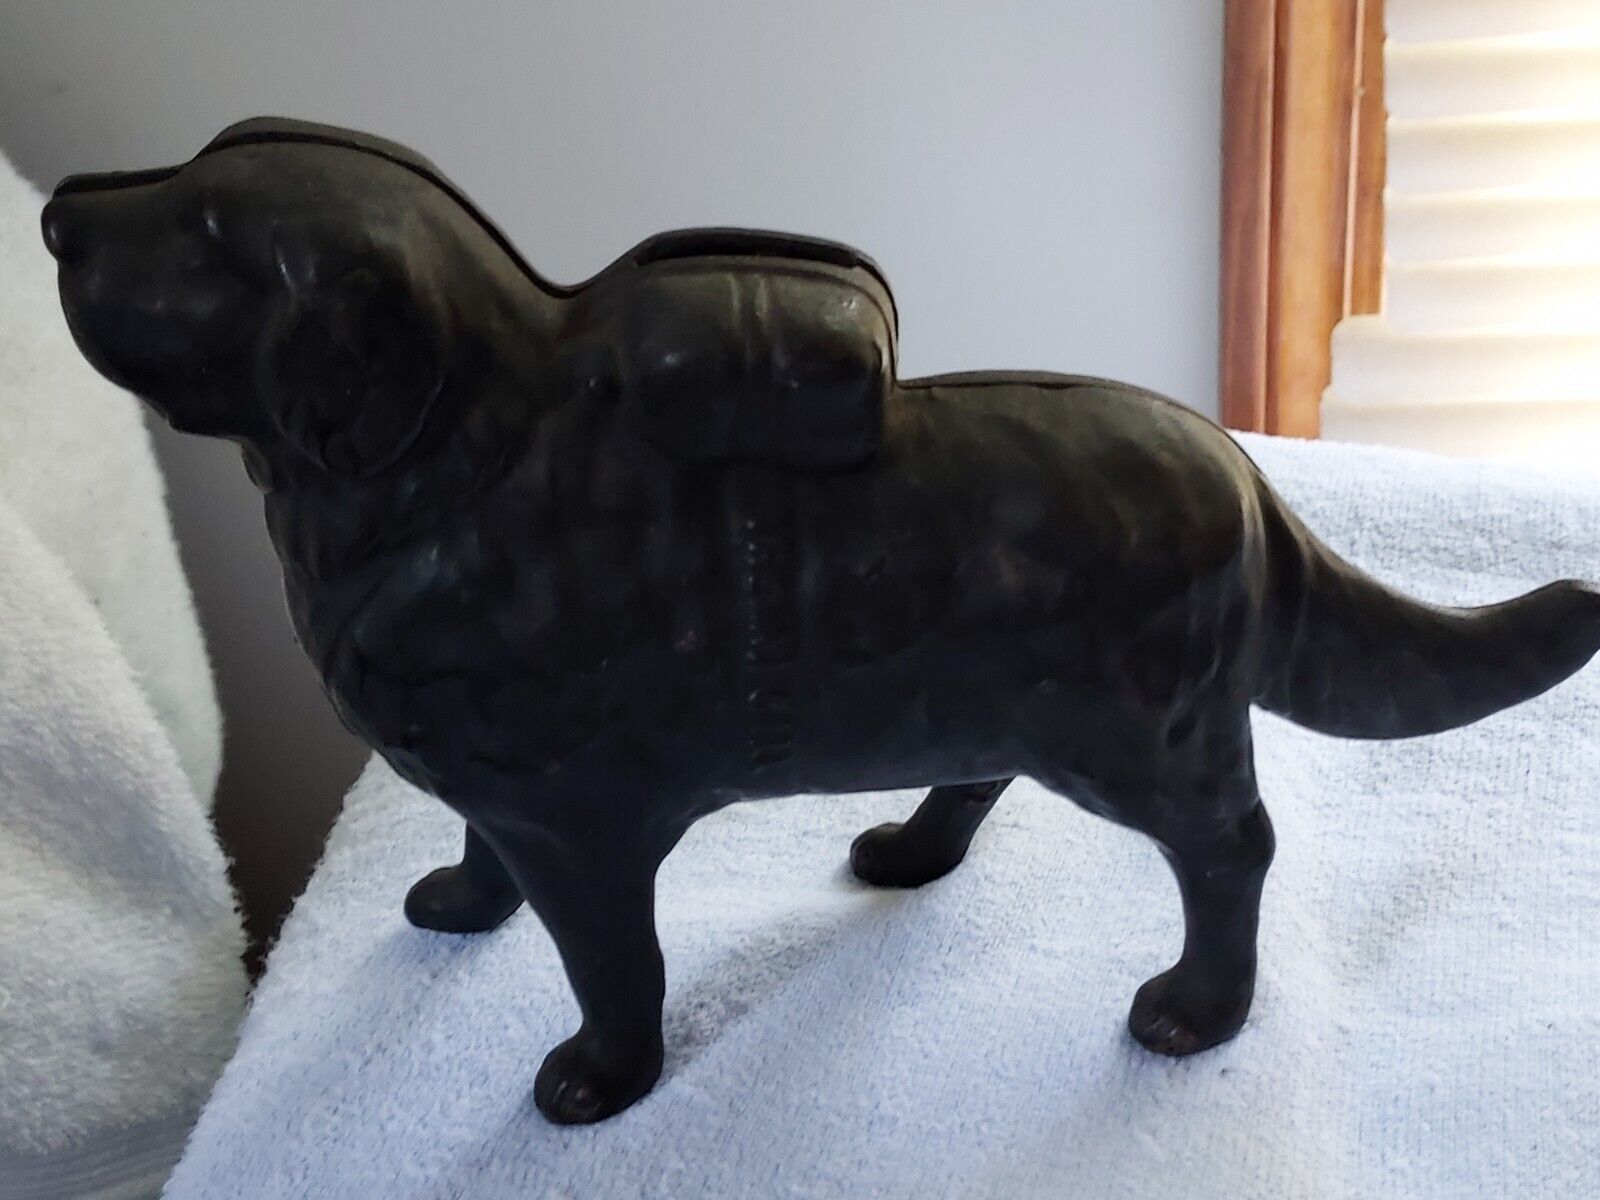 I Hear A Call Cast Iron Penny Bank St Bernard Dog Antique Dated 1900 AC Williams